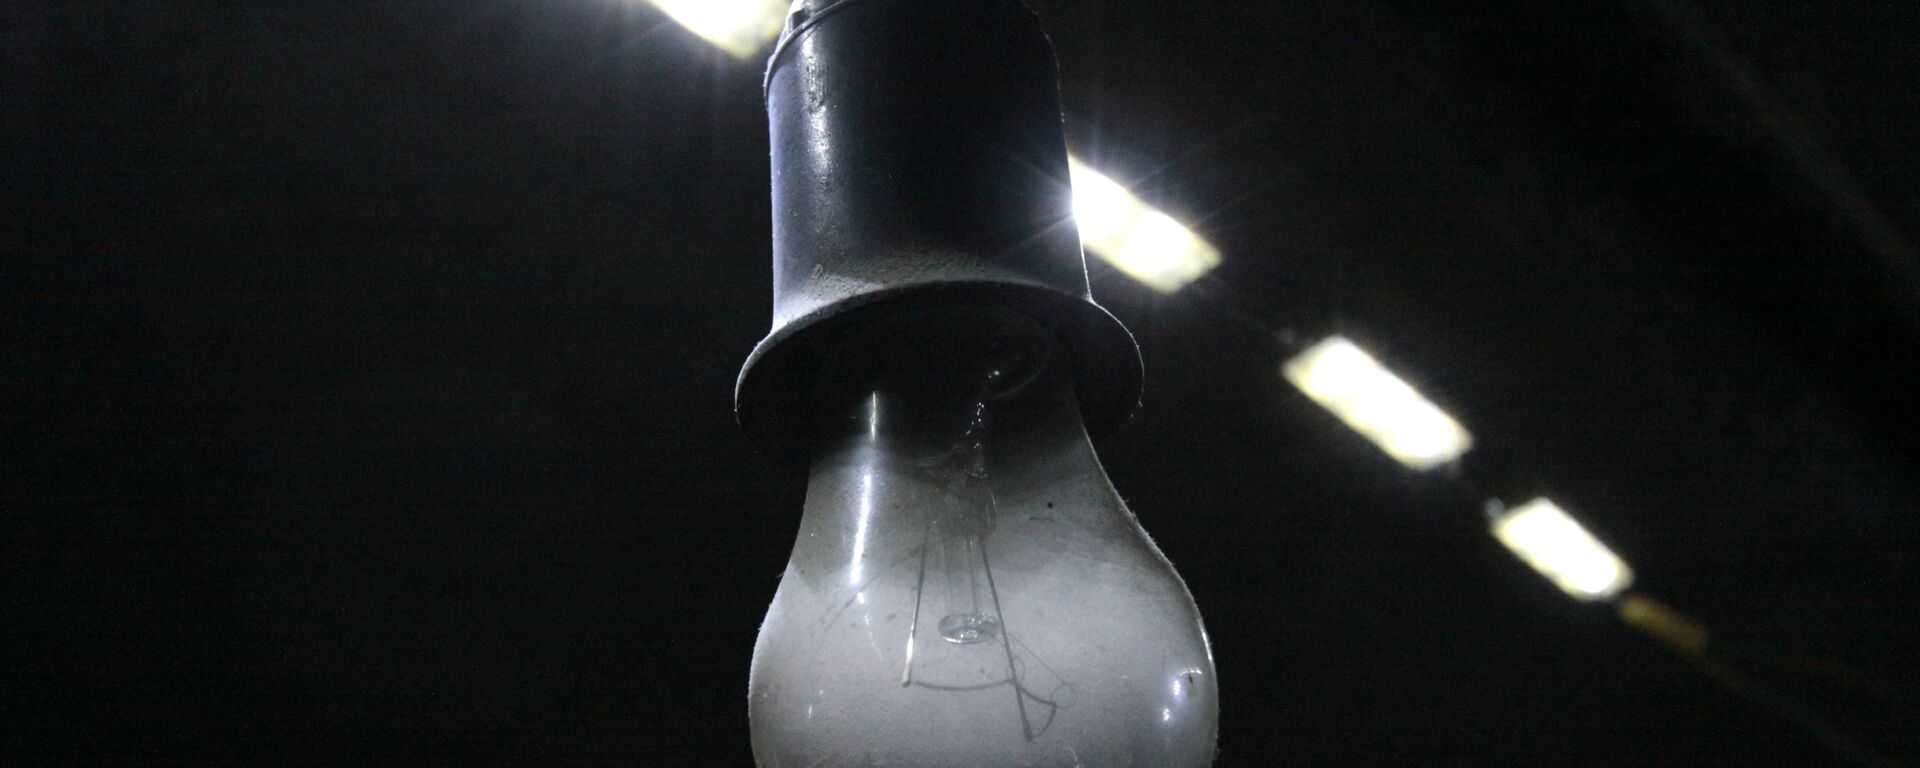 مصباح كهربائي - سبوتنيك عربي, 1920, 07.11.2022